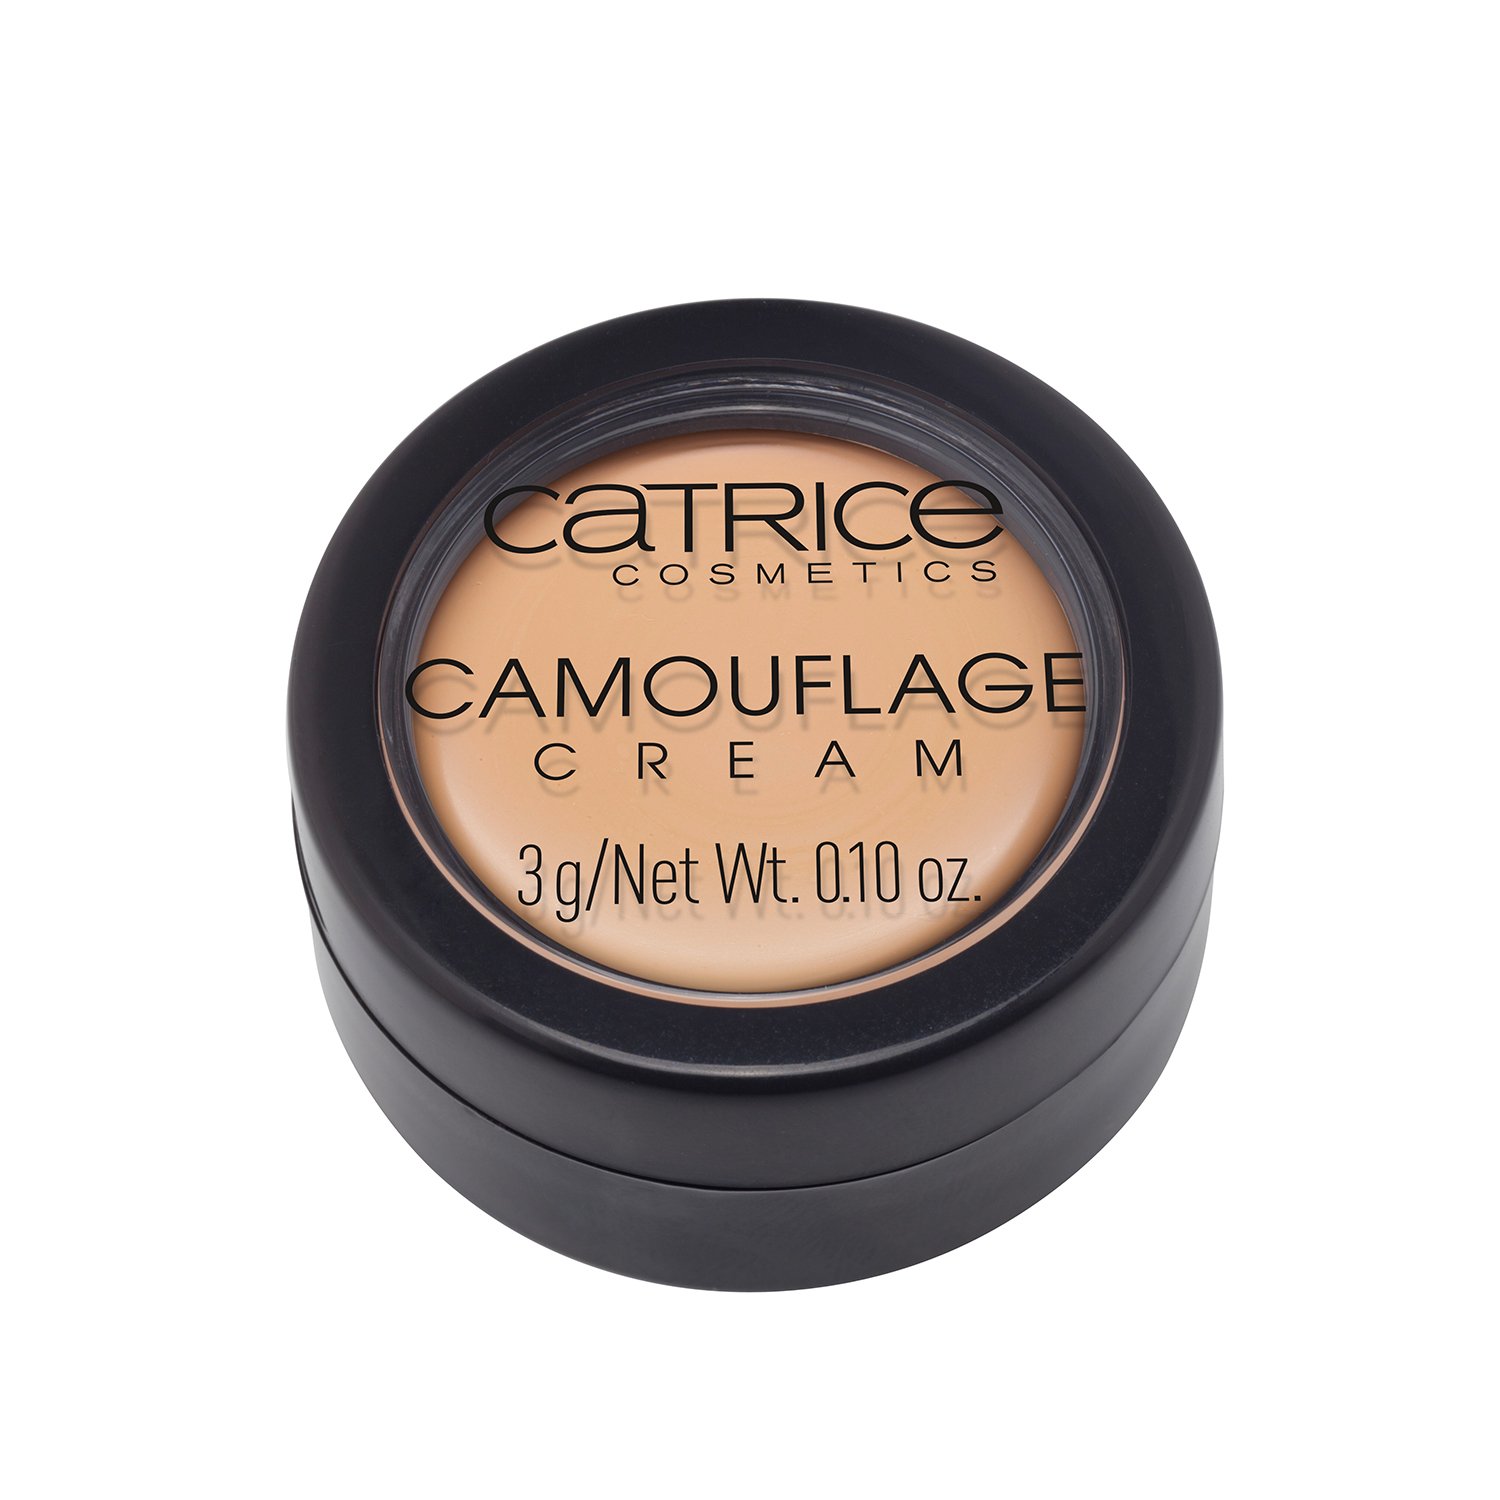 Catrice Camouflage Cream 015 - คาทริซคามัวร์ฟลาจครีม015